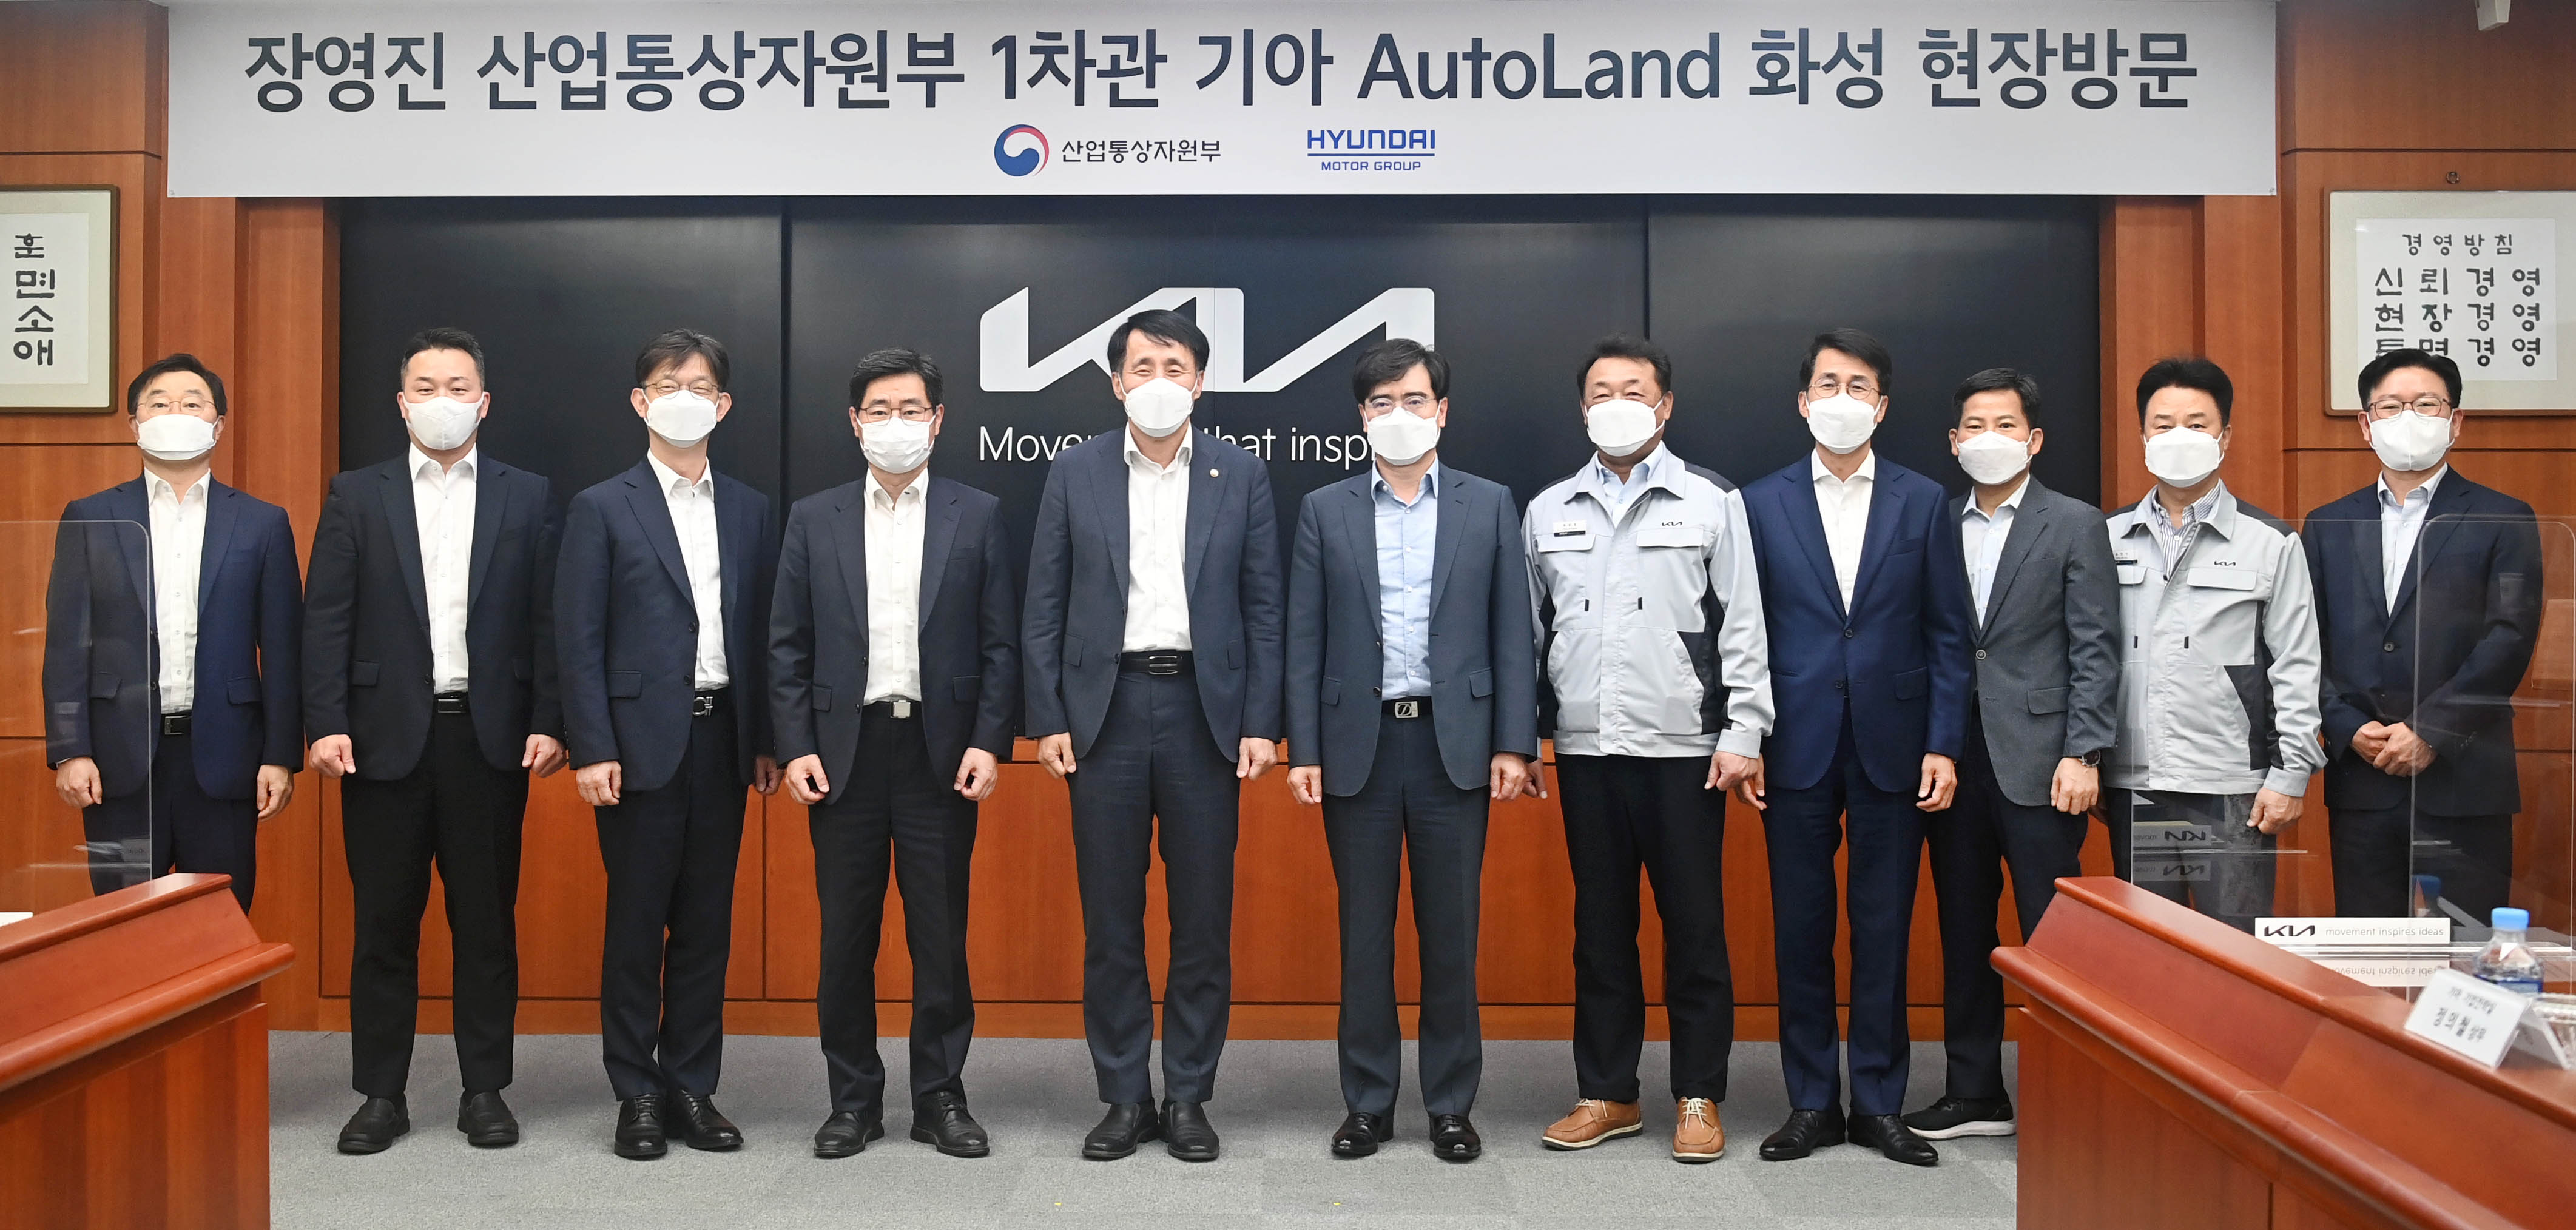 Vice Minister visits Hyundai-Kia Motors AutoLand plant Image 0